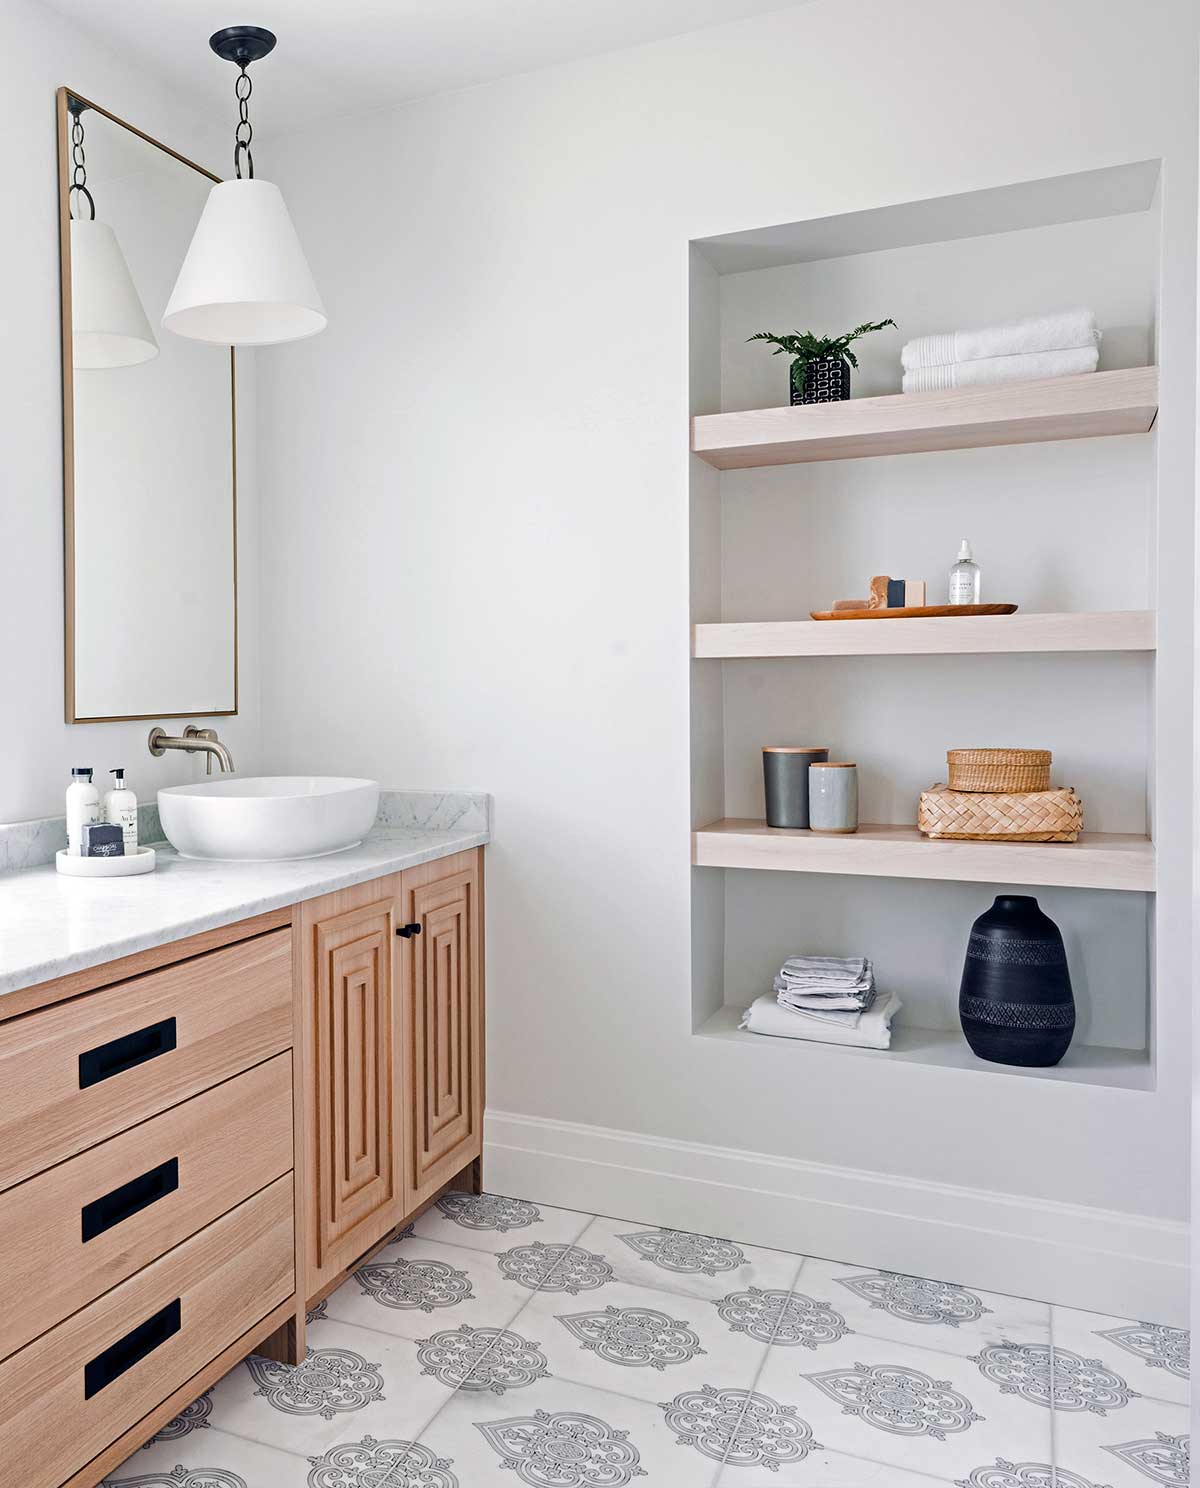 Decorative bathroom tile - Caprice Quartz on Carrara Floor Bathroom Floor